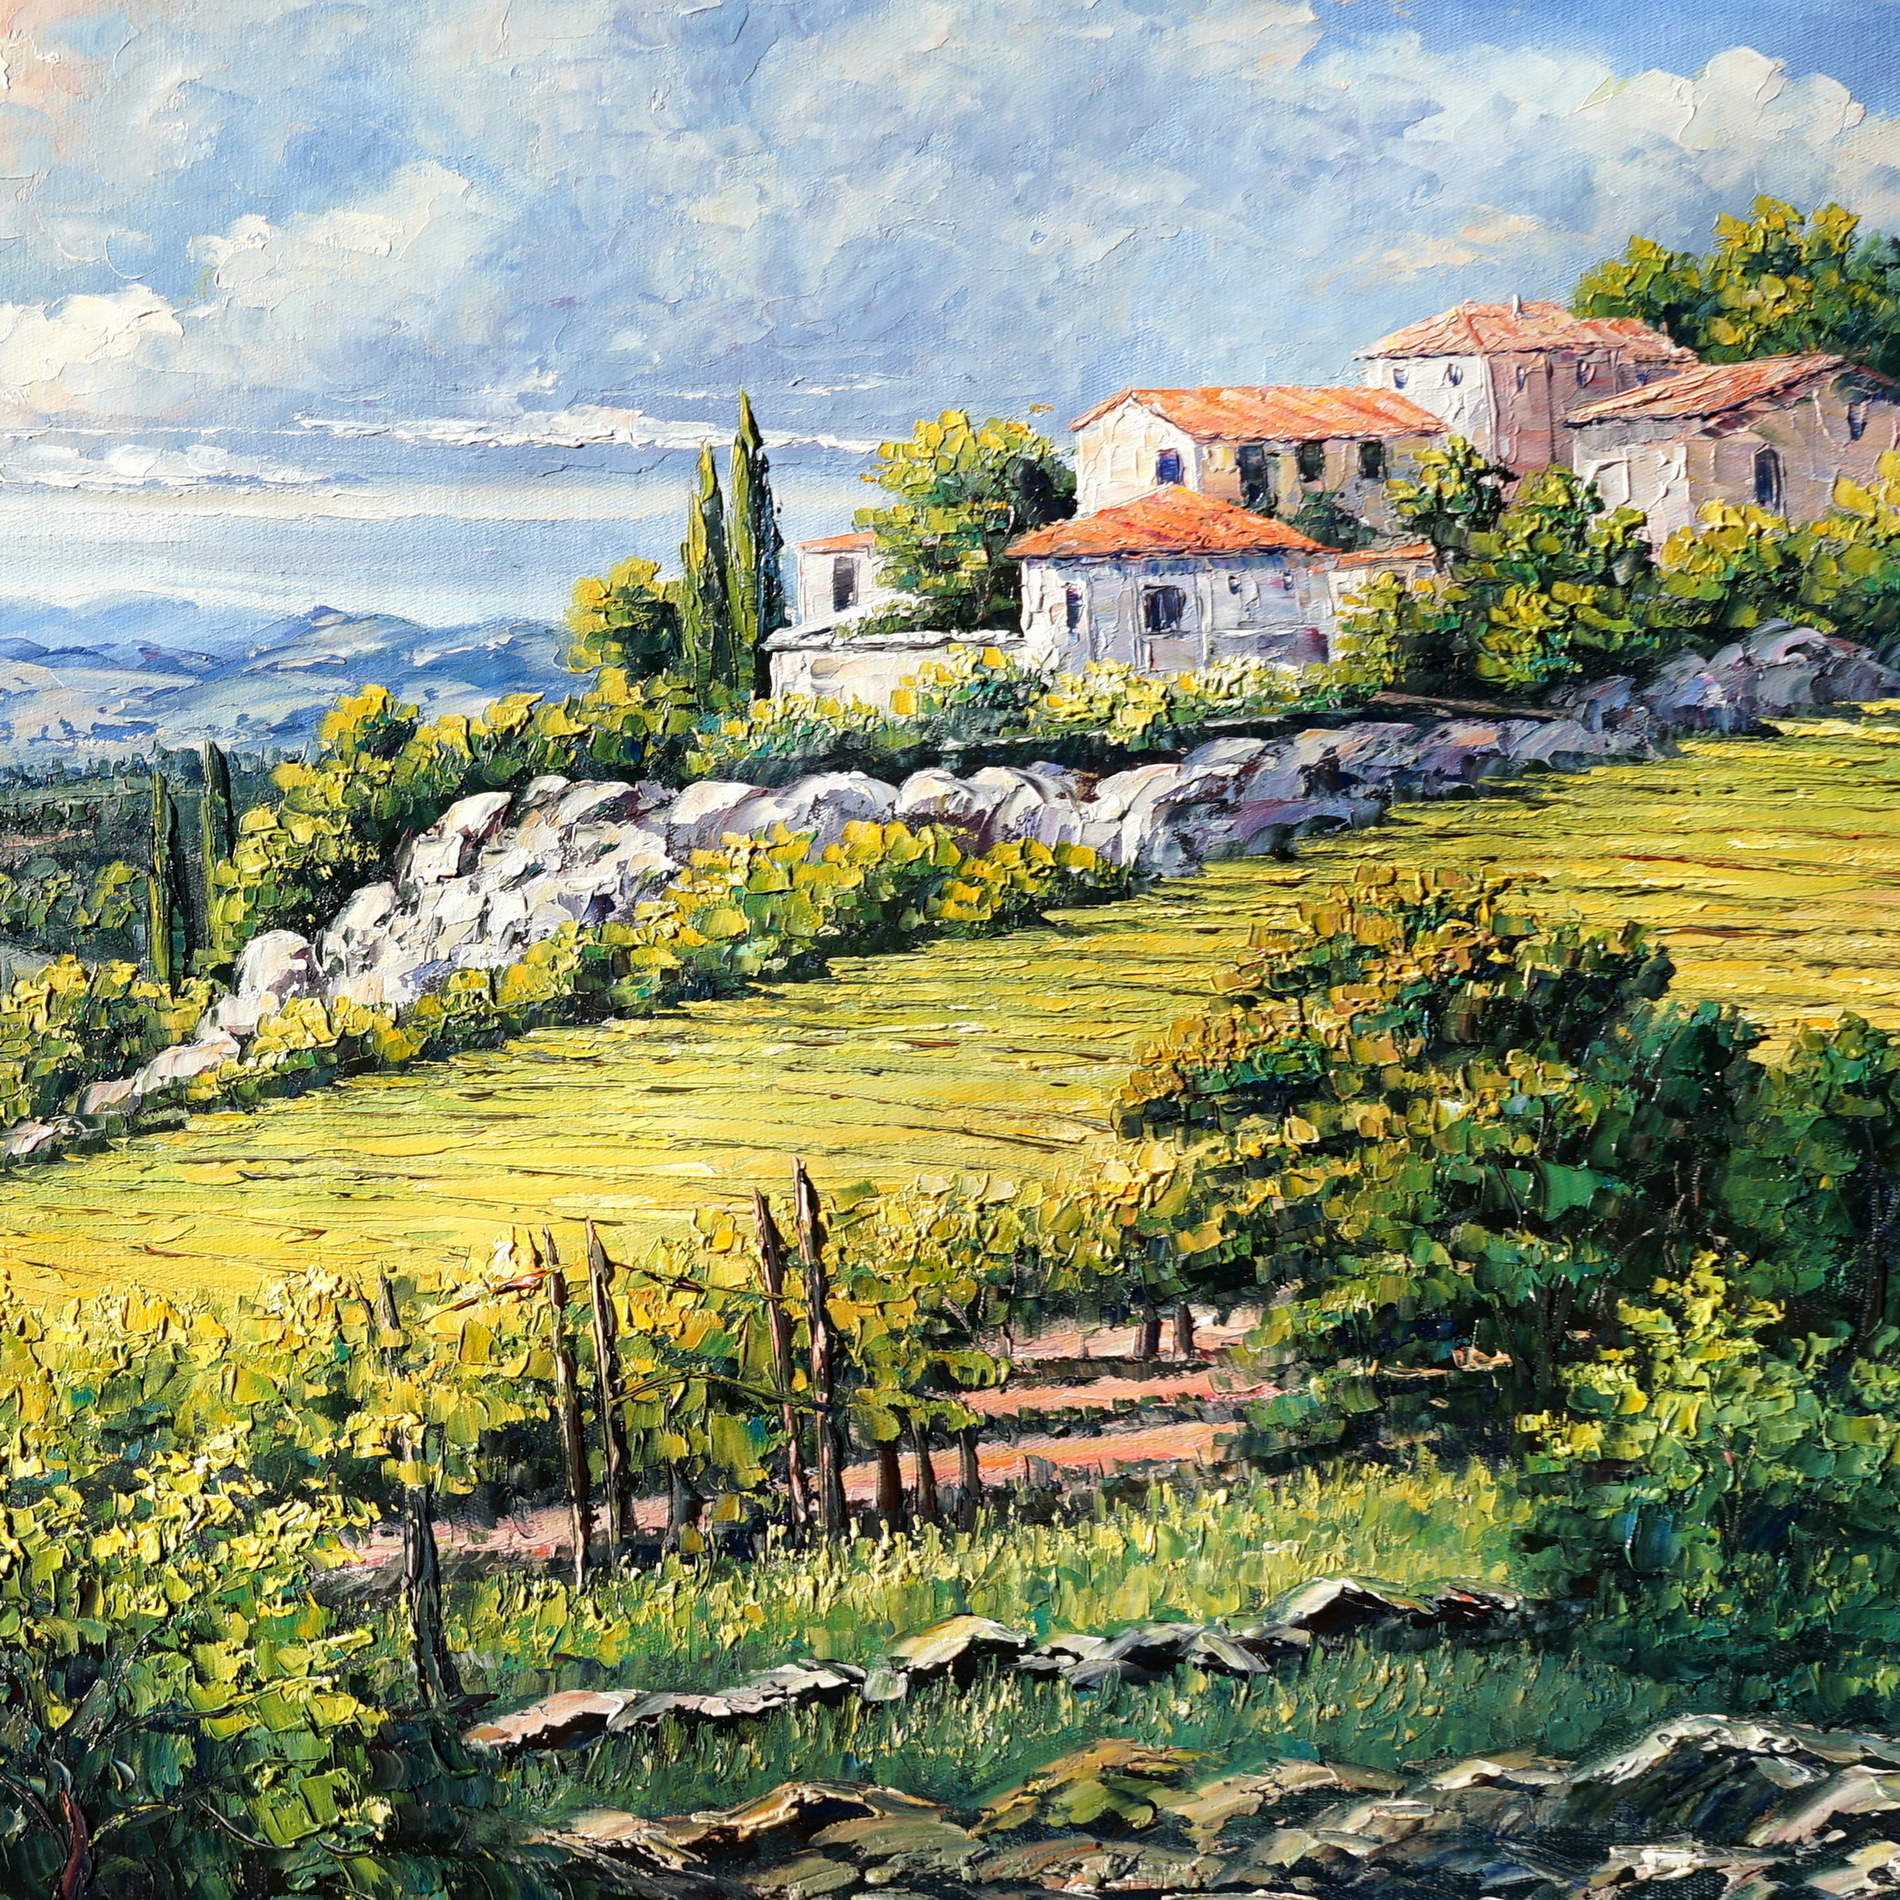 Hand painted Tuscan hills vineyards 60x120cm